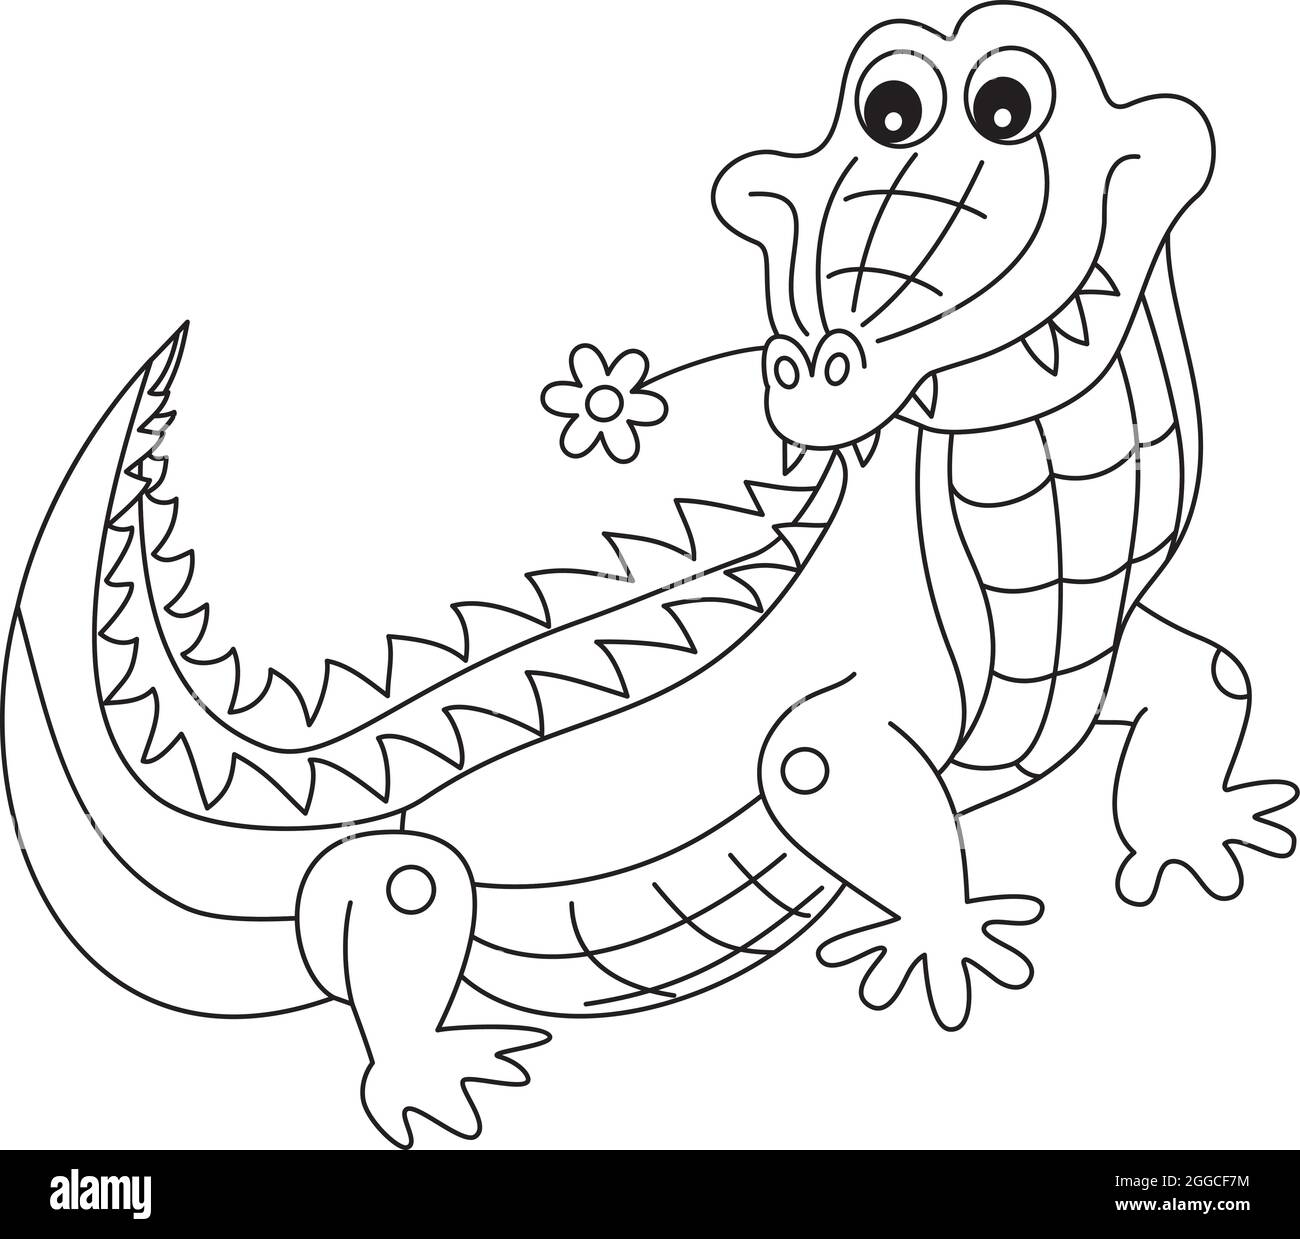 Crocodile cartoon Black and White Stock Photos & Images - Alamy